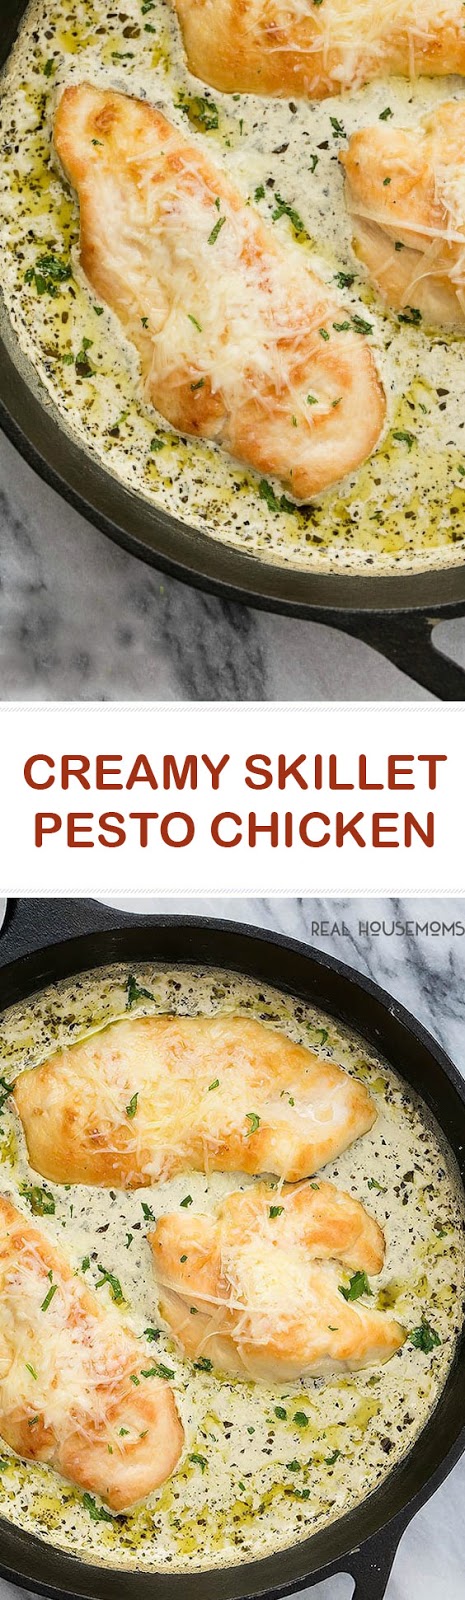 Creamy Skillet Pesto Chicken